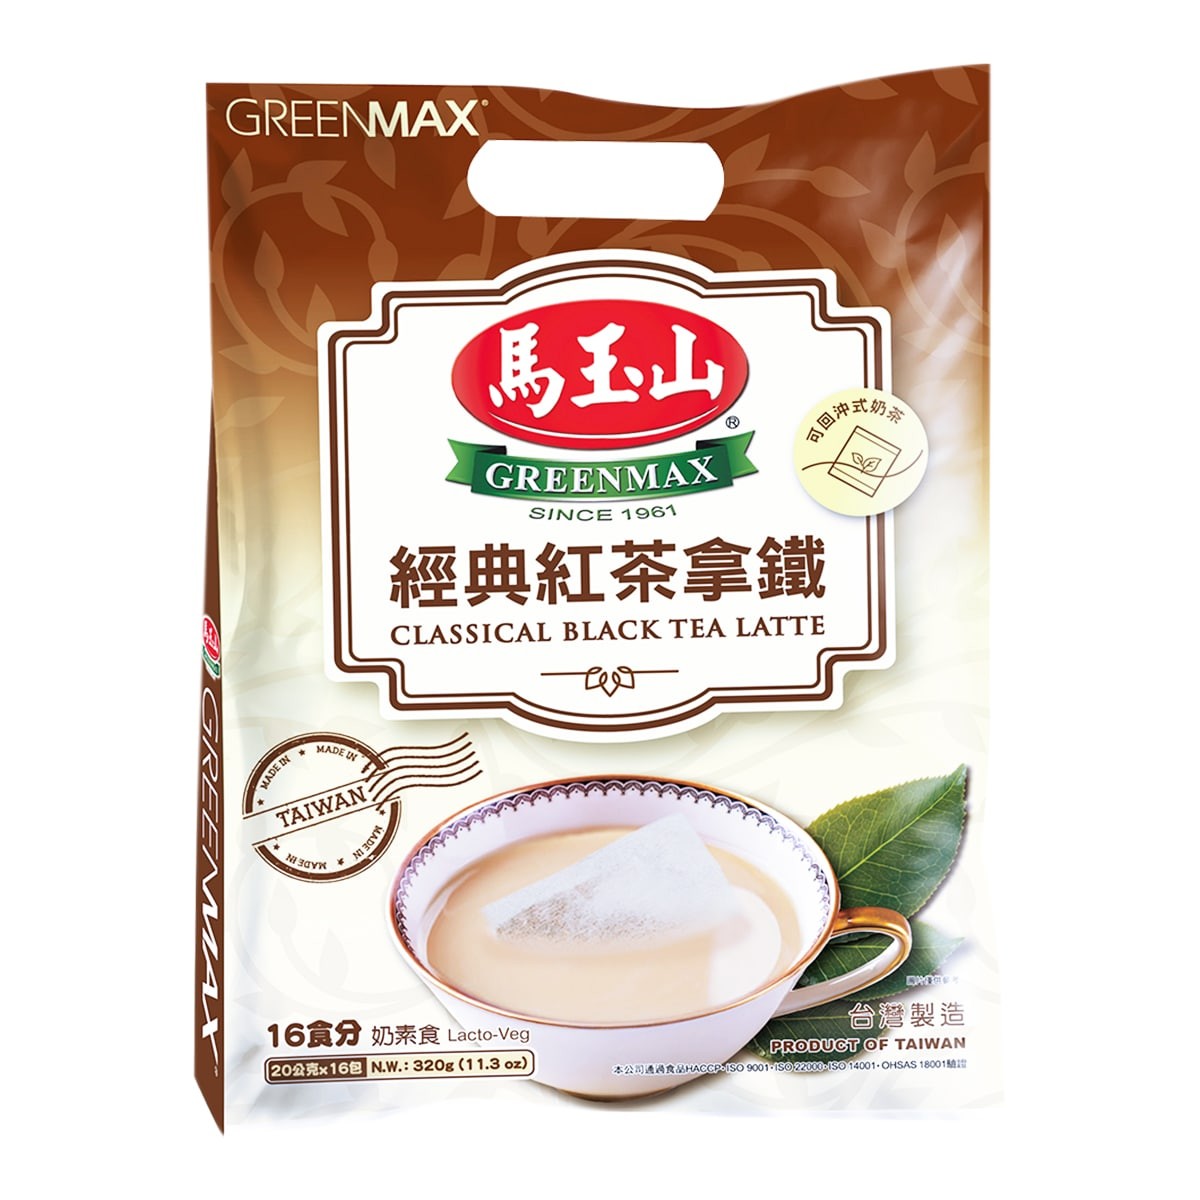 greenmax-classical-black-tea